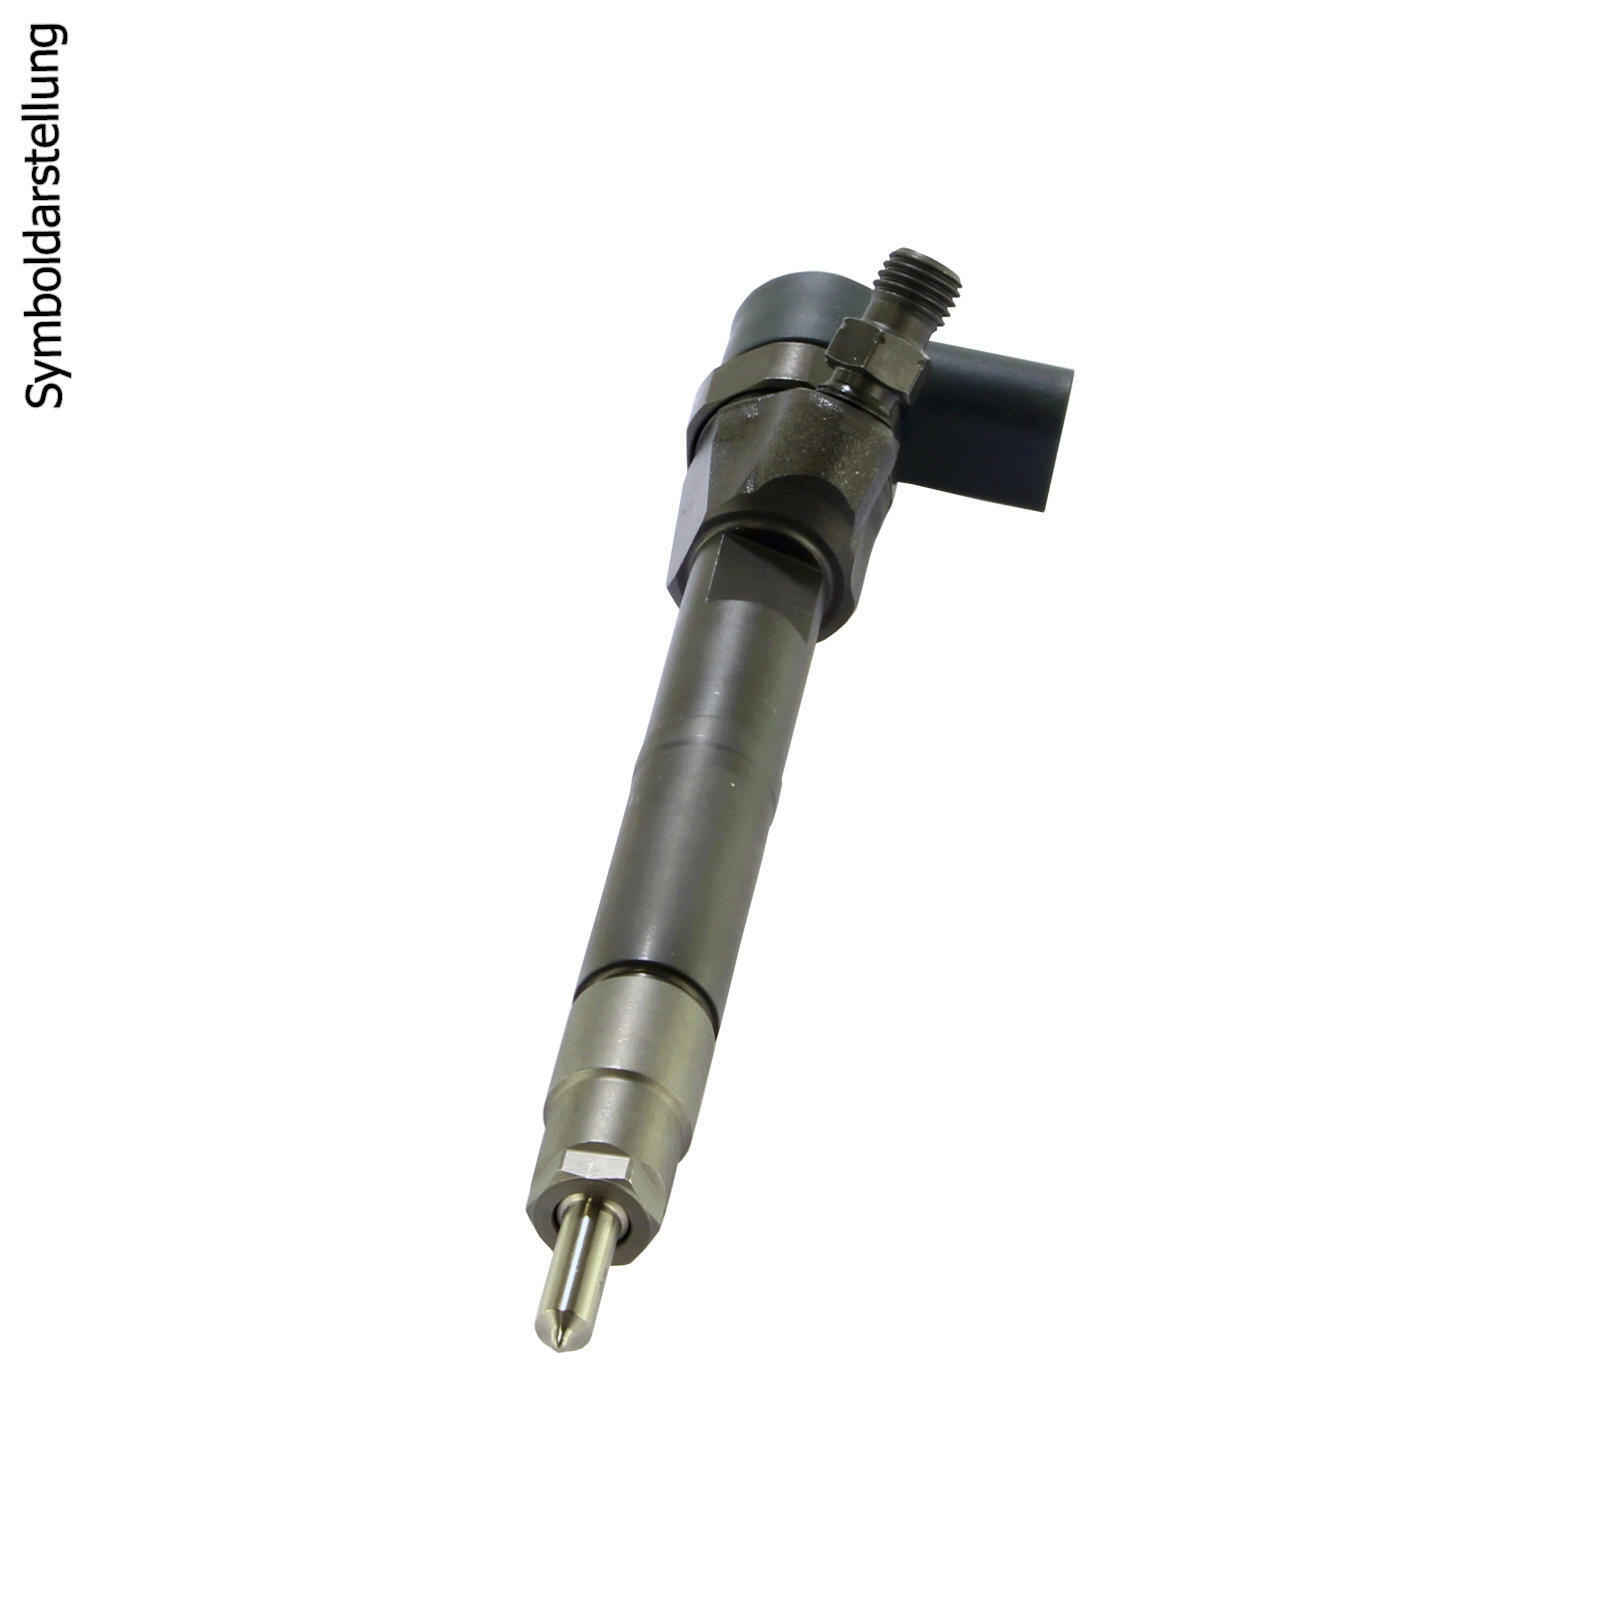 VEMO Injector Nozzle Q+, original equipment manufacturer quality